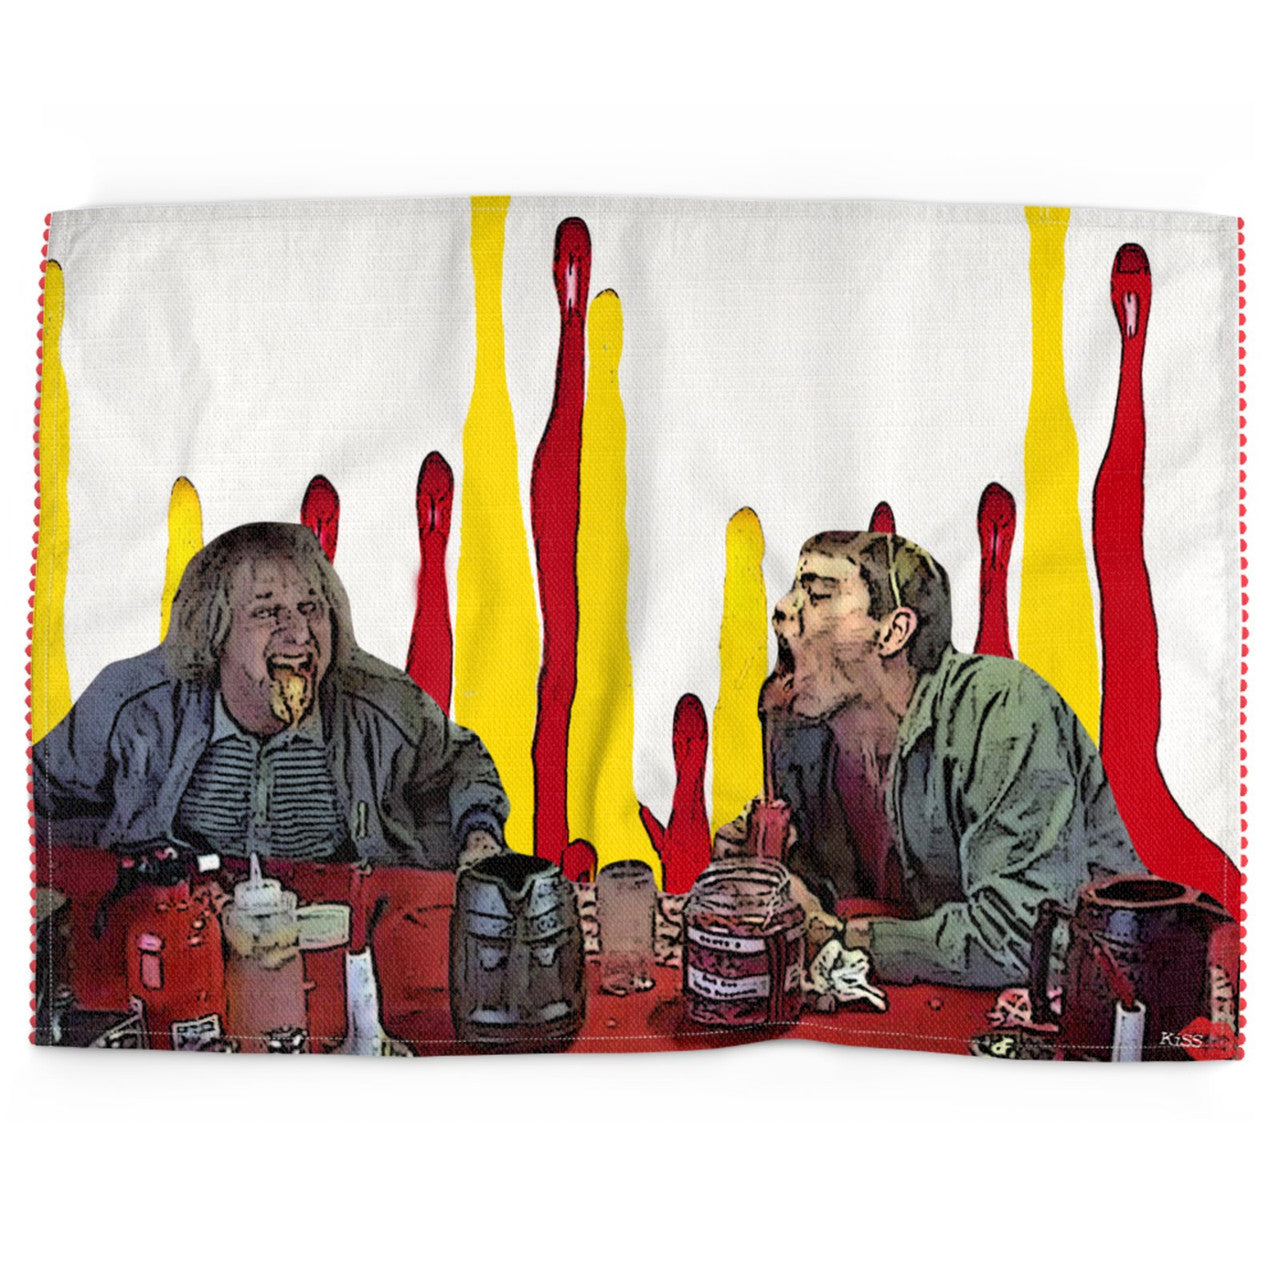 Dumb & Dumber  KiSS Tea Towel - Lloyd Christmas - Jim Carrey Jeff Daniels - Ketchup Mustard - Funny Gift Kitchen Cotton Linen